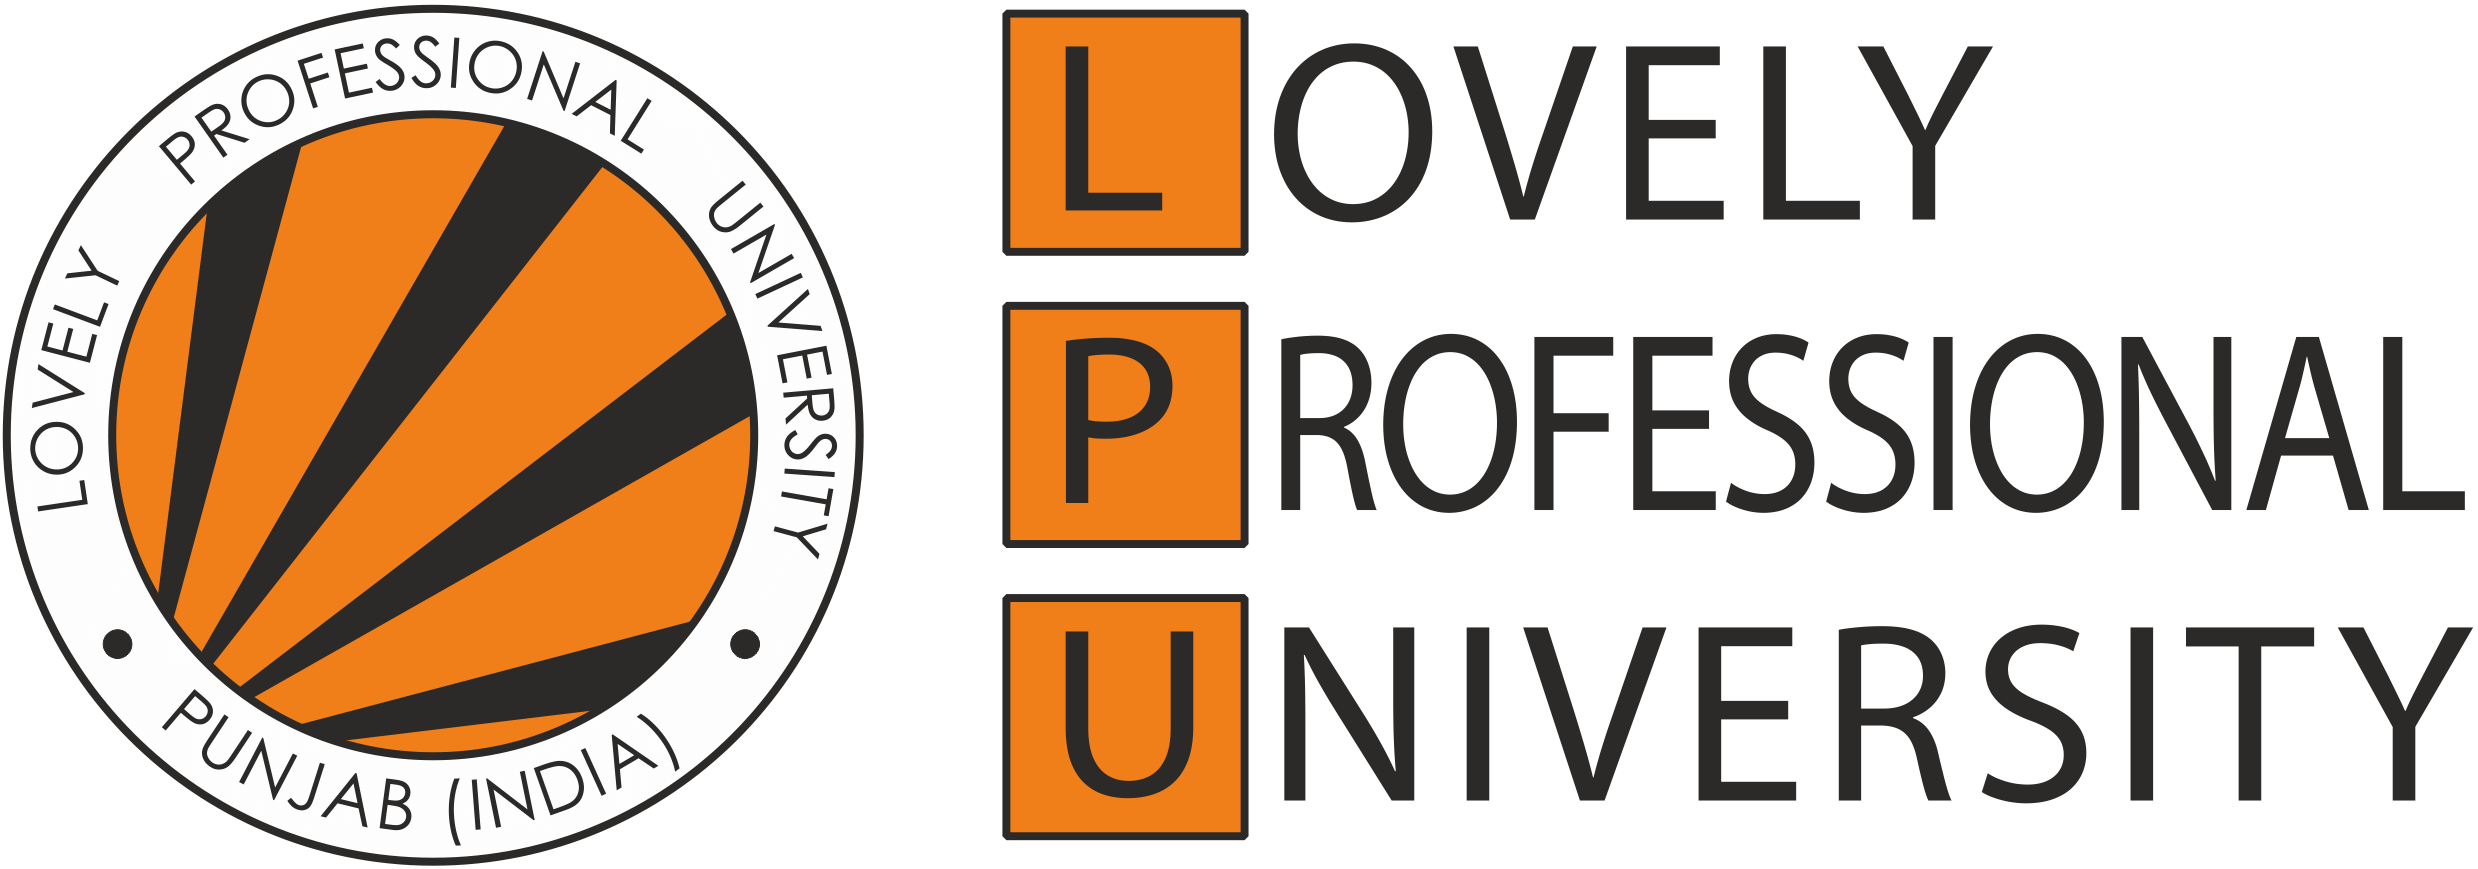 LPU Logo   Lovely Professional University png